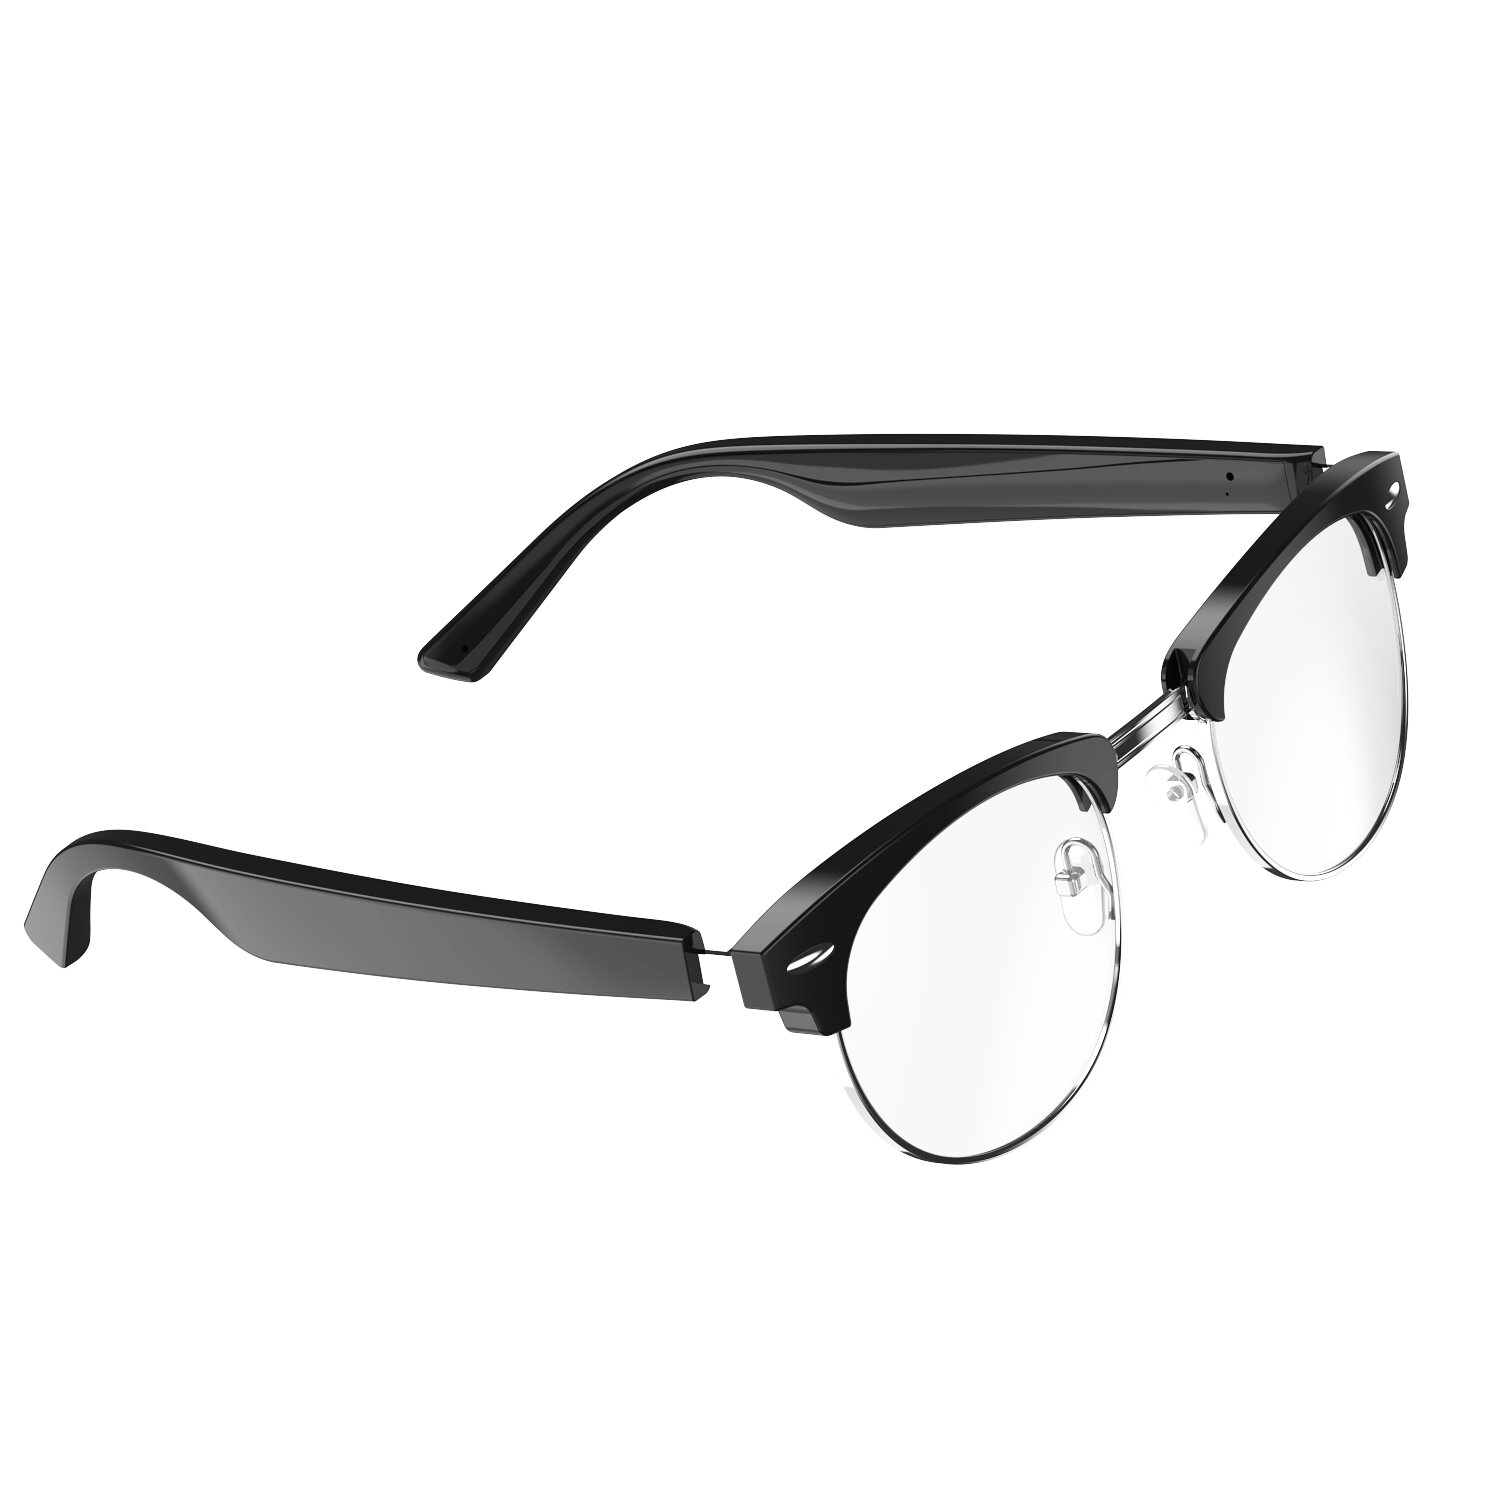 Bakeey F1 Music Control bluetooth Glasses BT5.0 Waterproof Anti-blue Light Smart Glasses